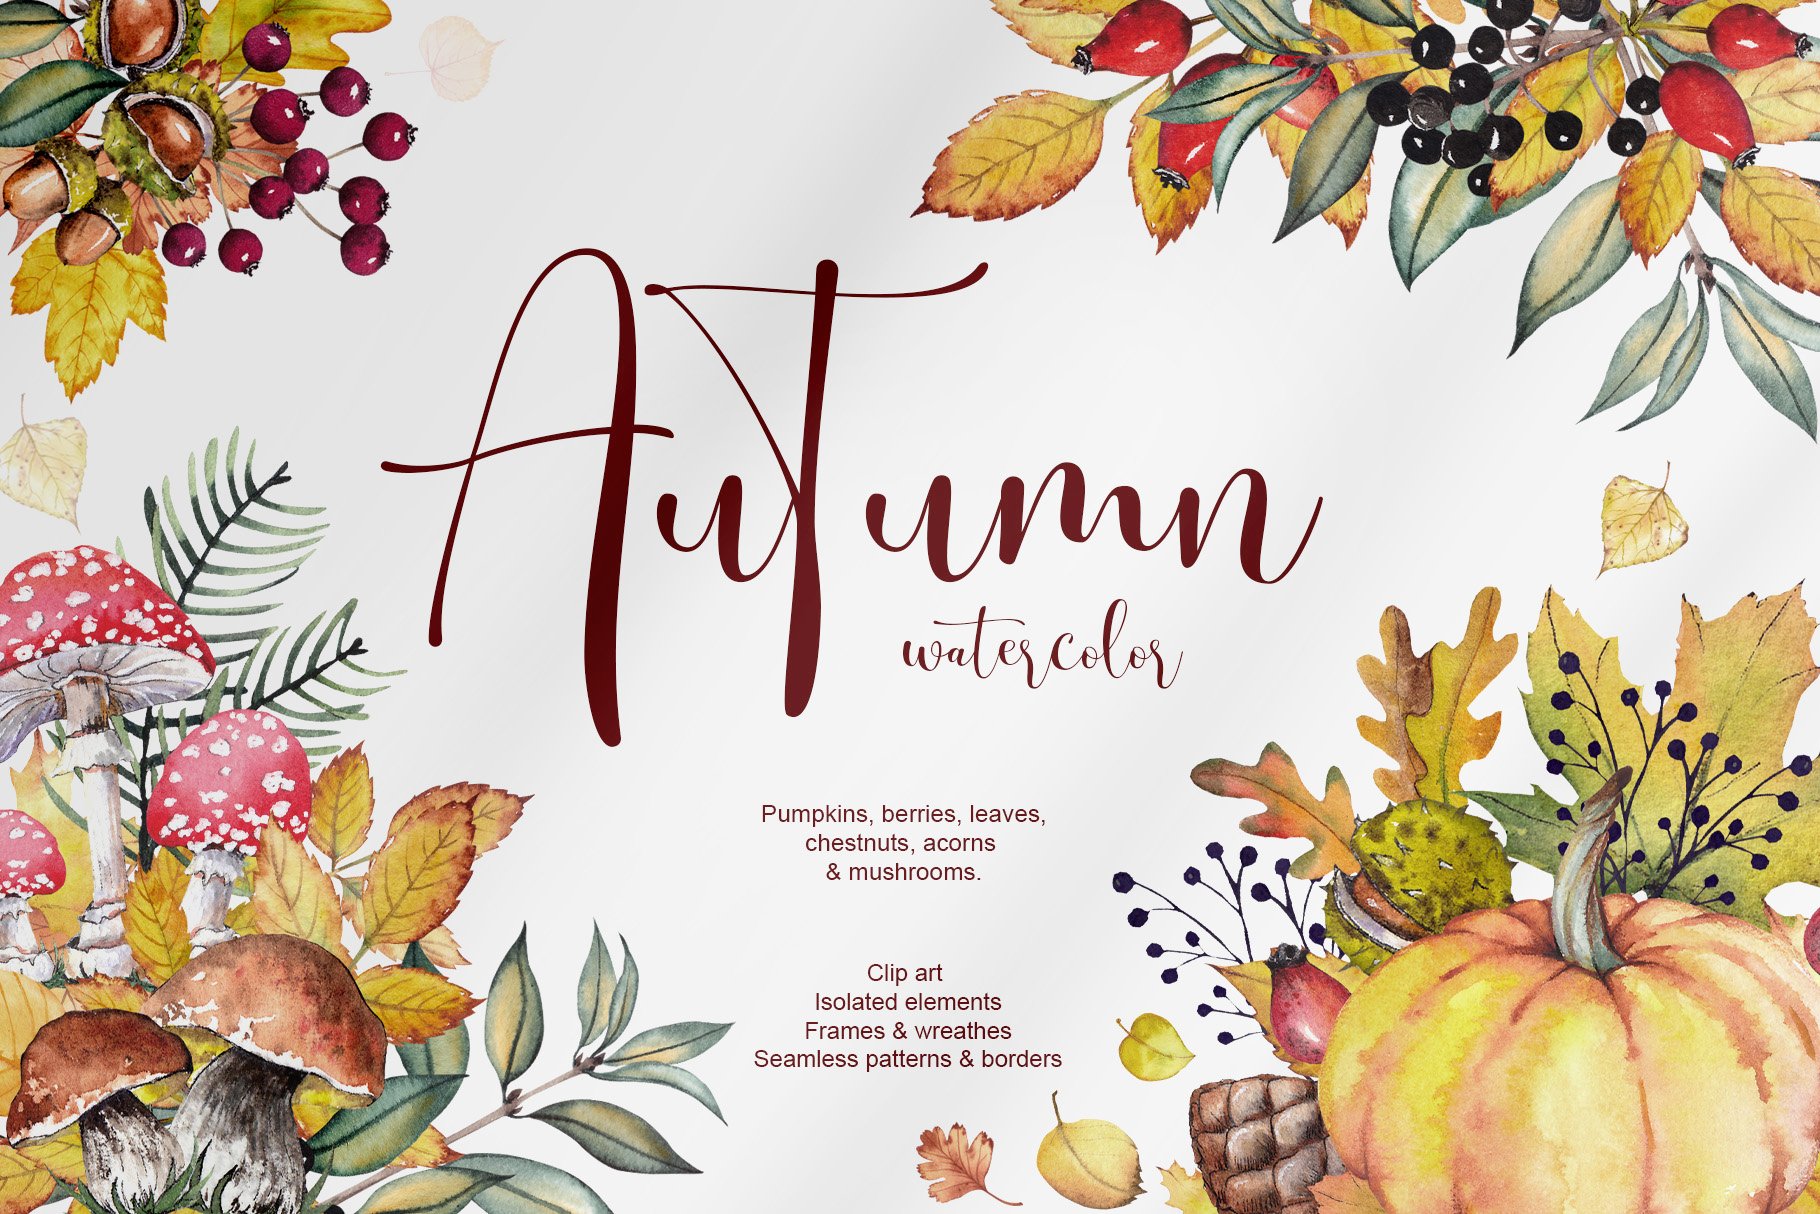 Watercolor Autumn cover image.